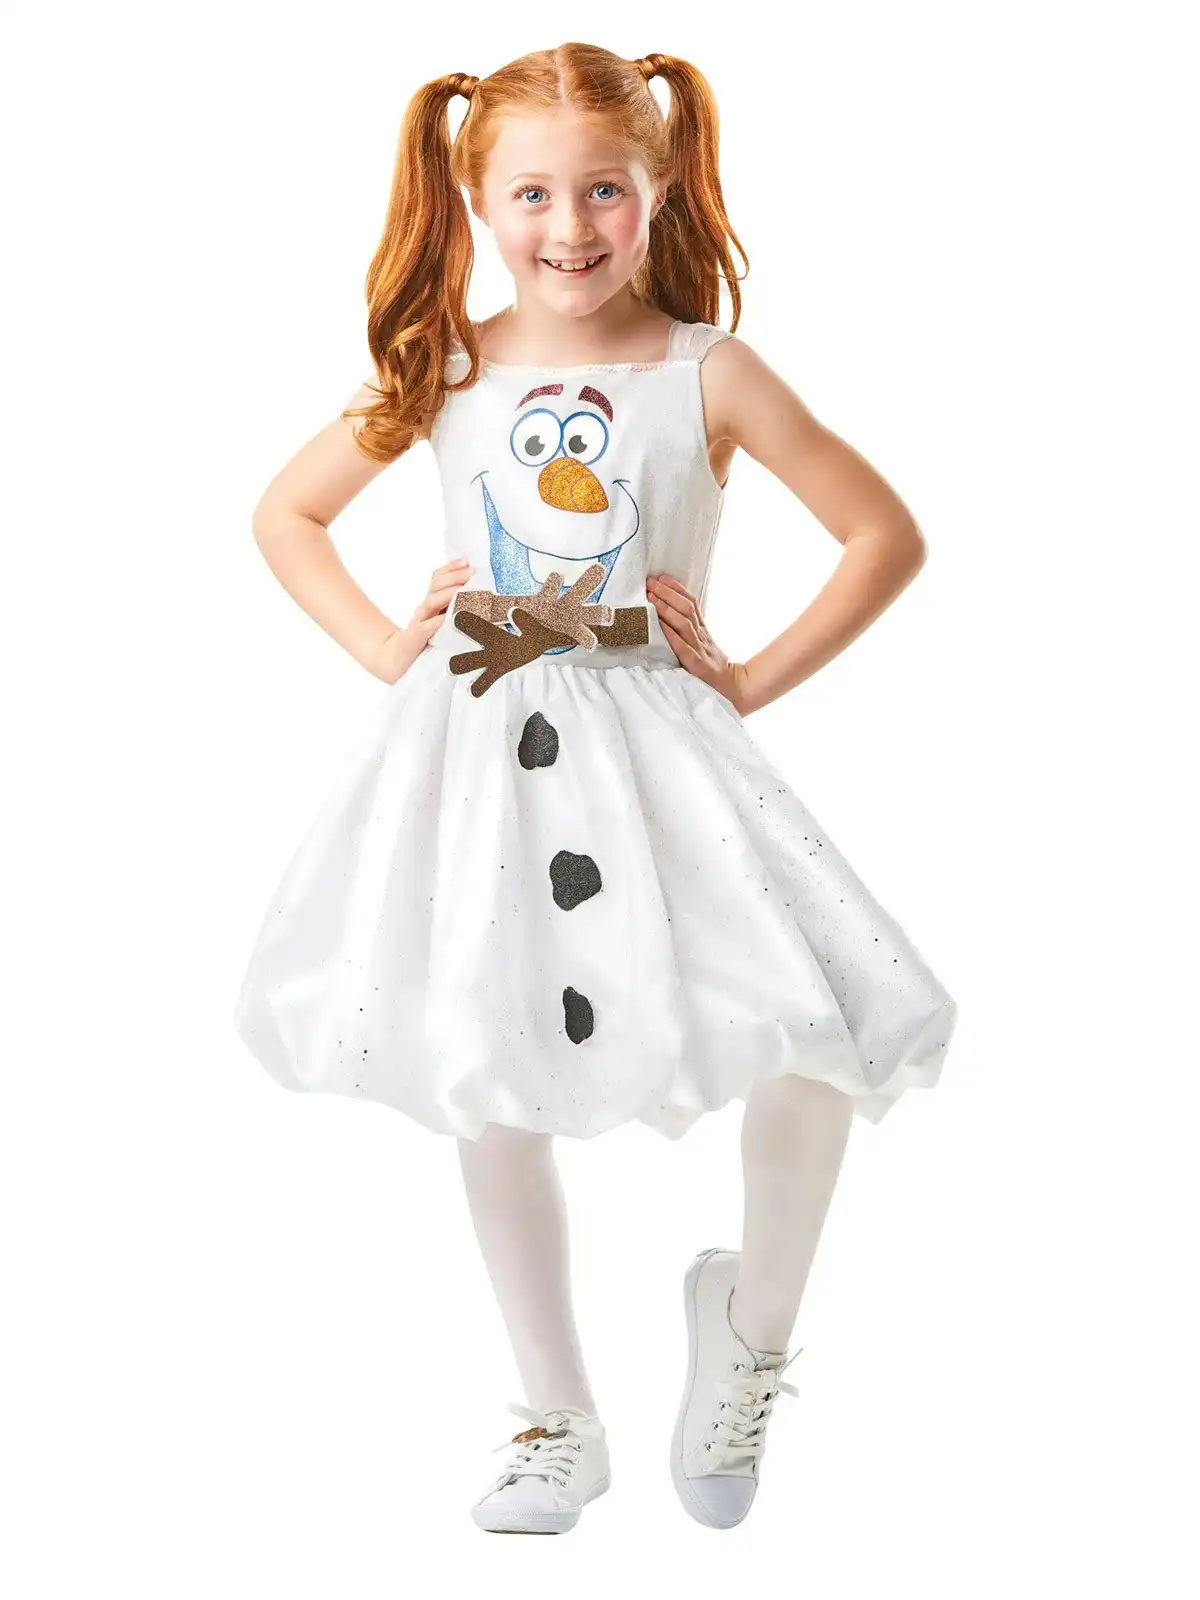 Disney Olaf Frozen 2 Tutu Dress Up Halloween Party Girls Costume White Size 4-6y